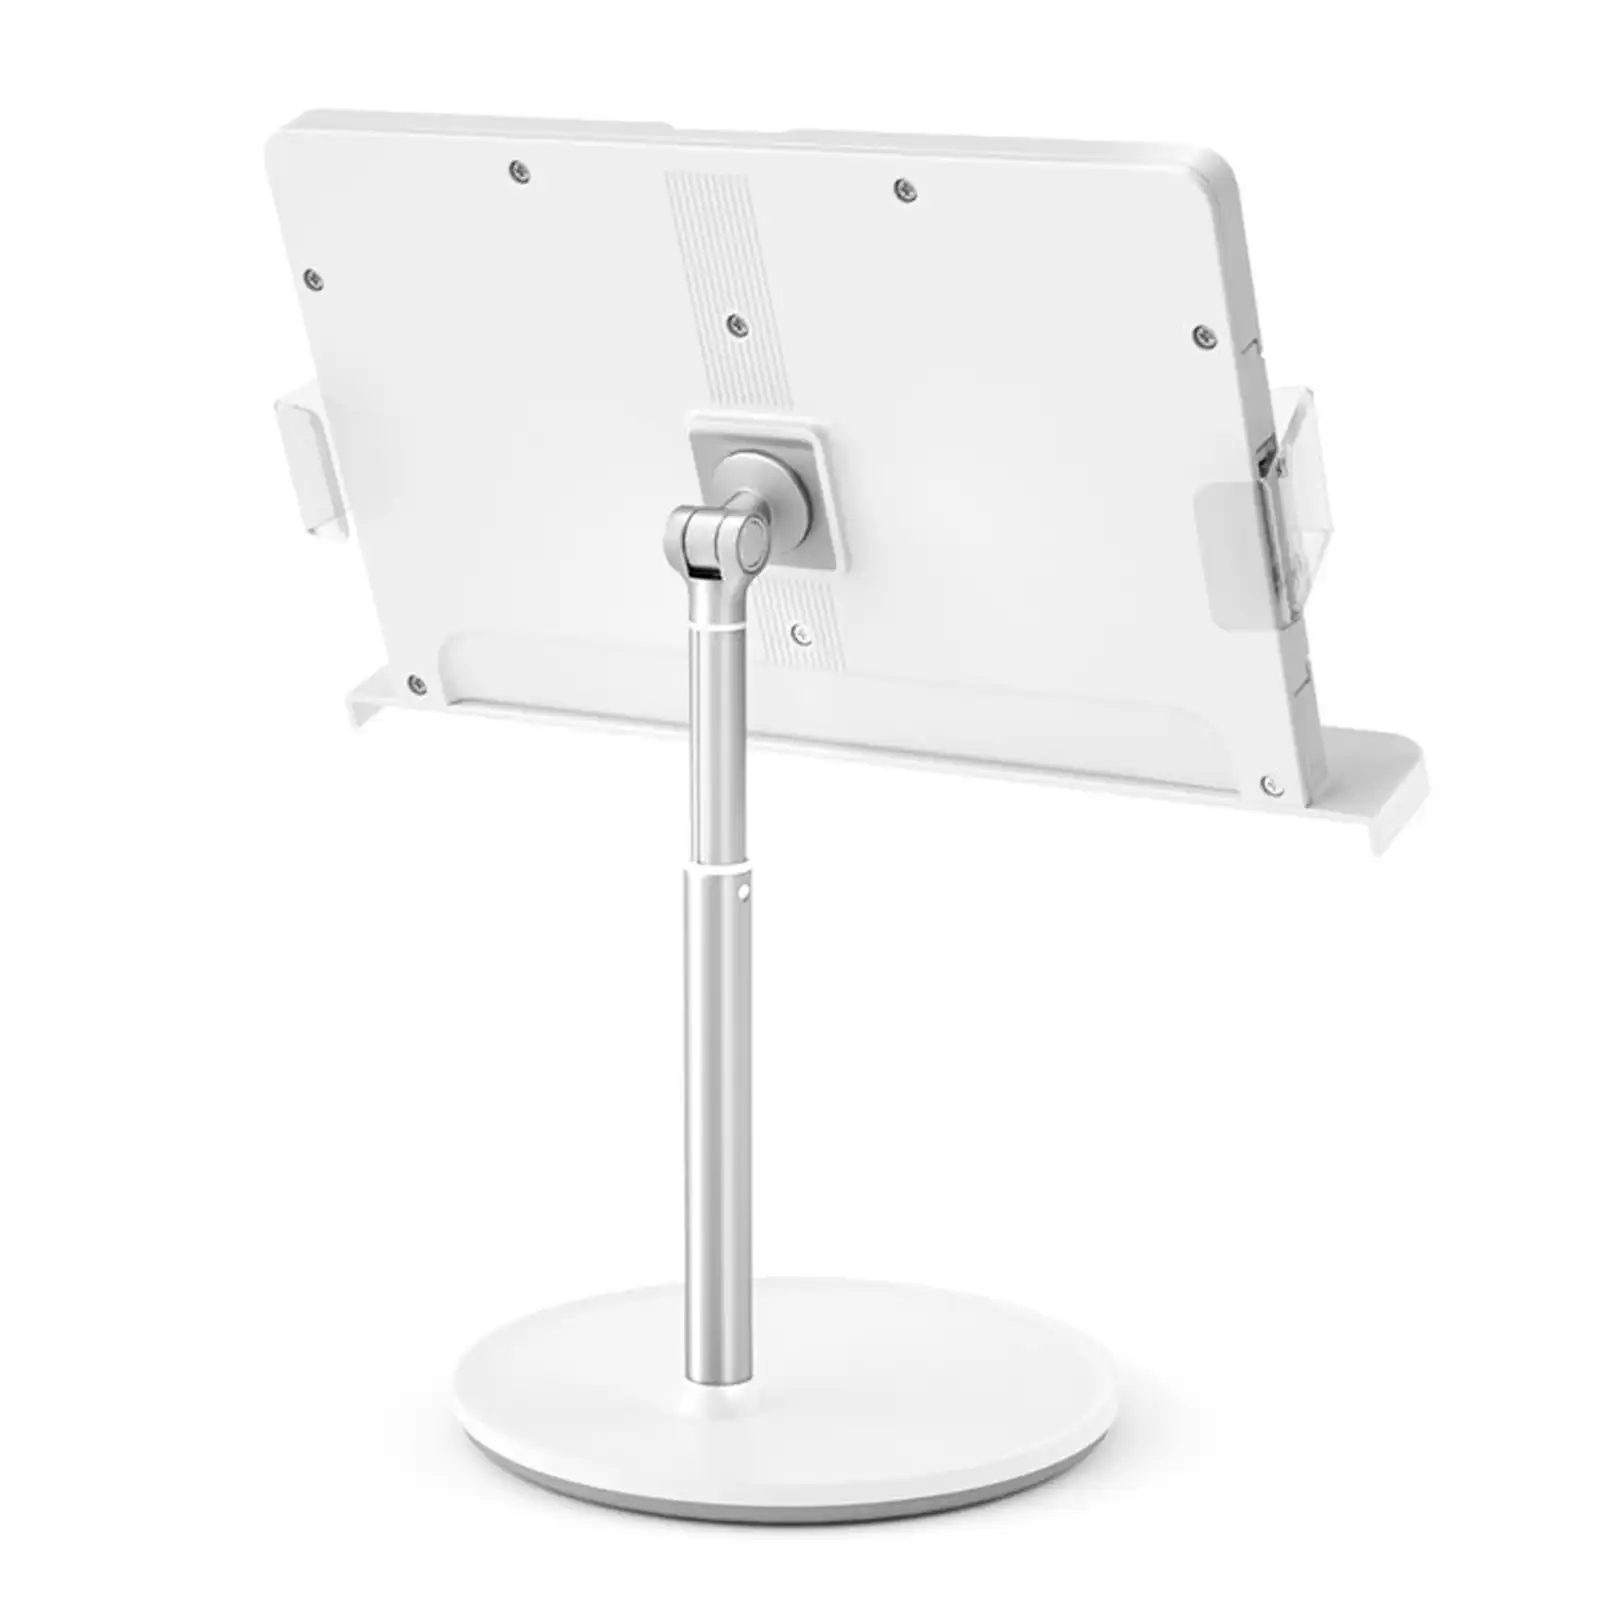 TODO Aluminium Universal Book Stand Mount Holder Tablet Phone Bracket Desk Stand